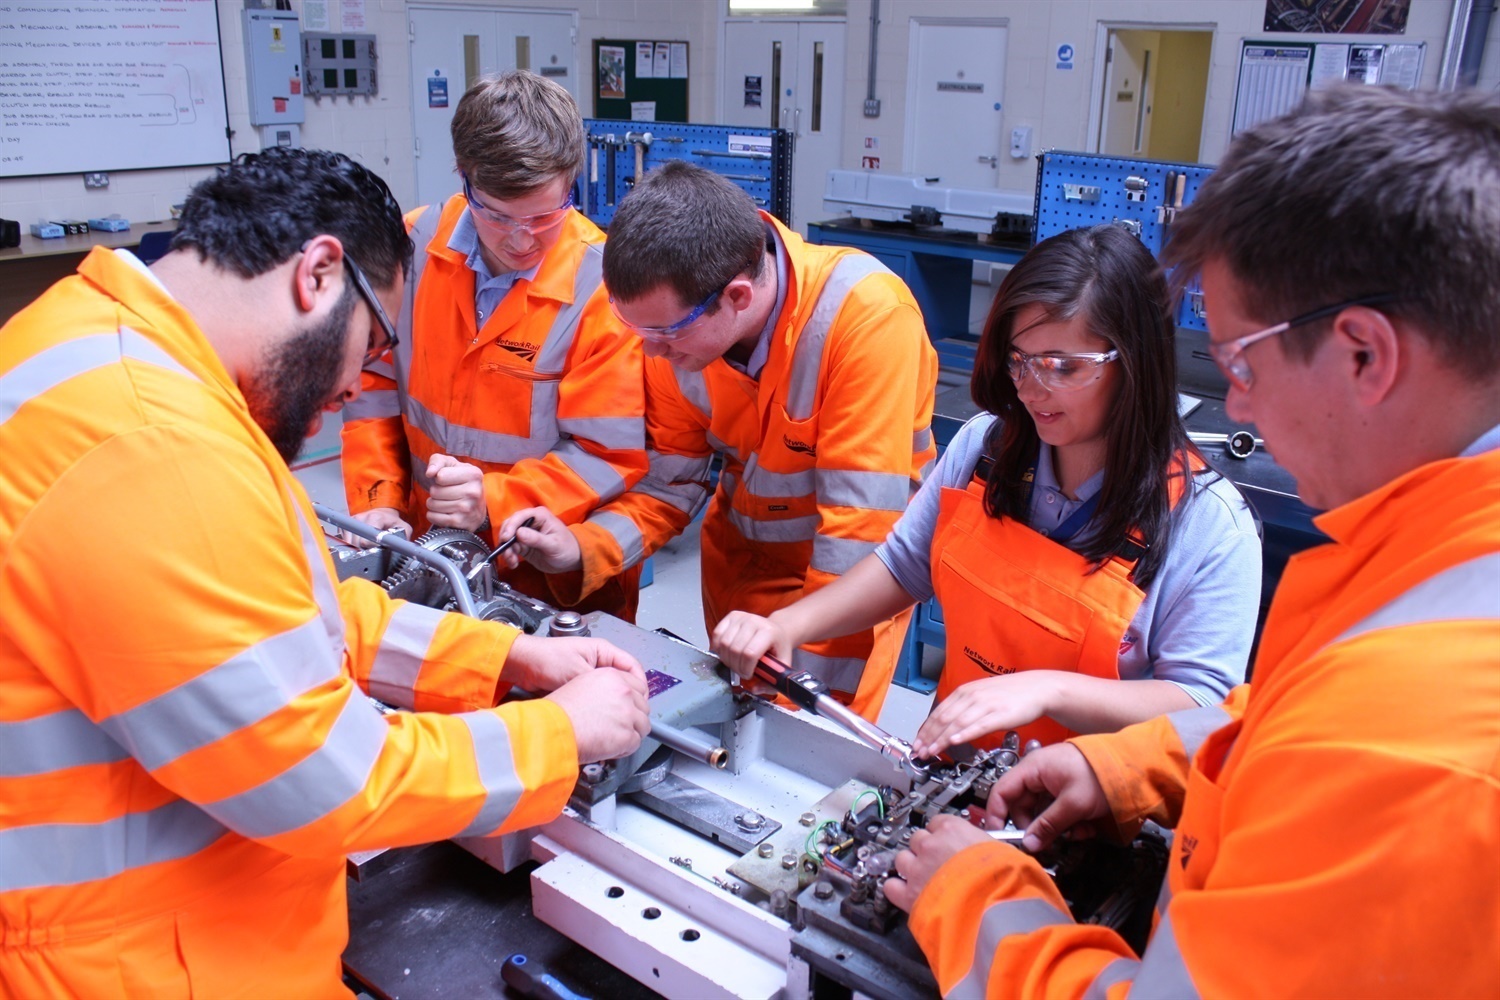 London Midland adopts new apprenticeship standard